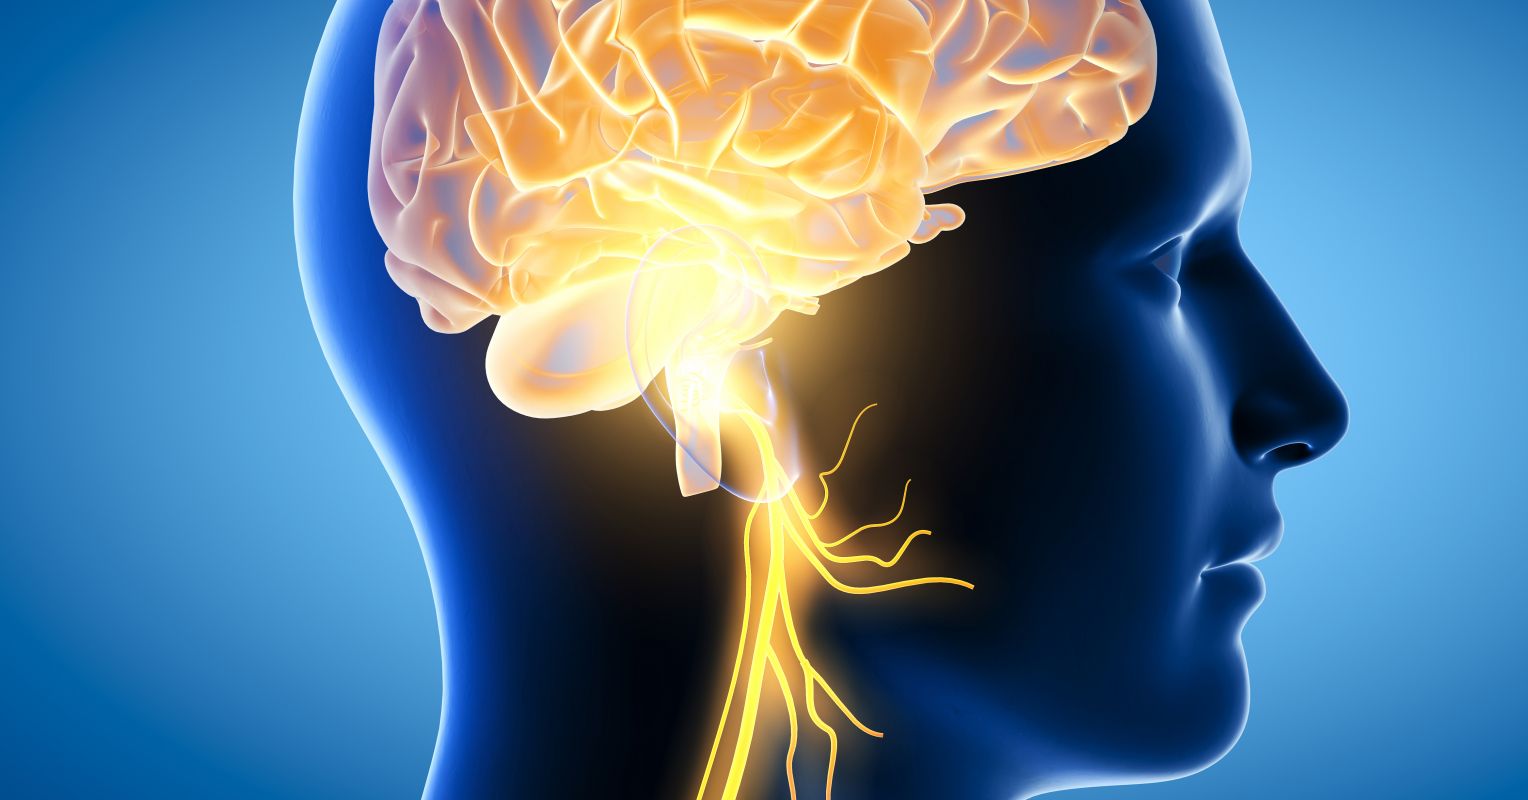 electroCore's non-invasive vagus nerve stimulation device shown to